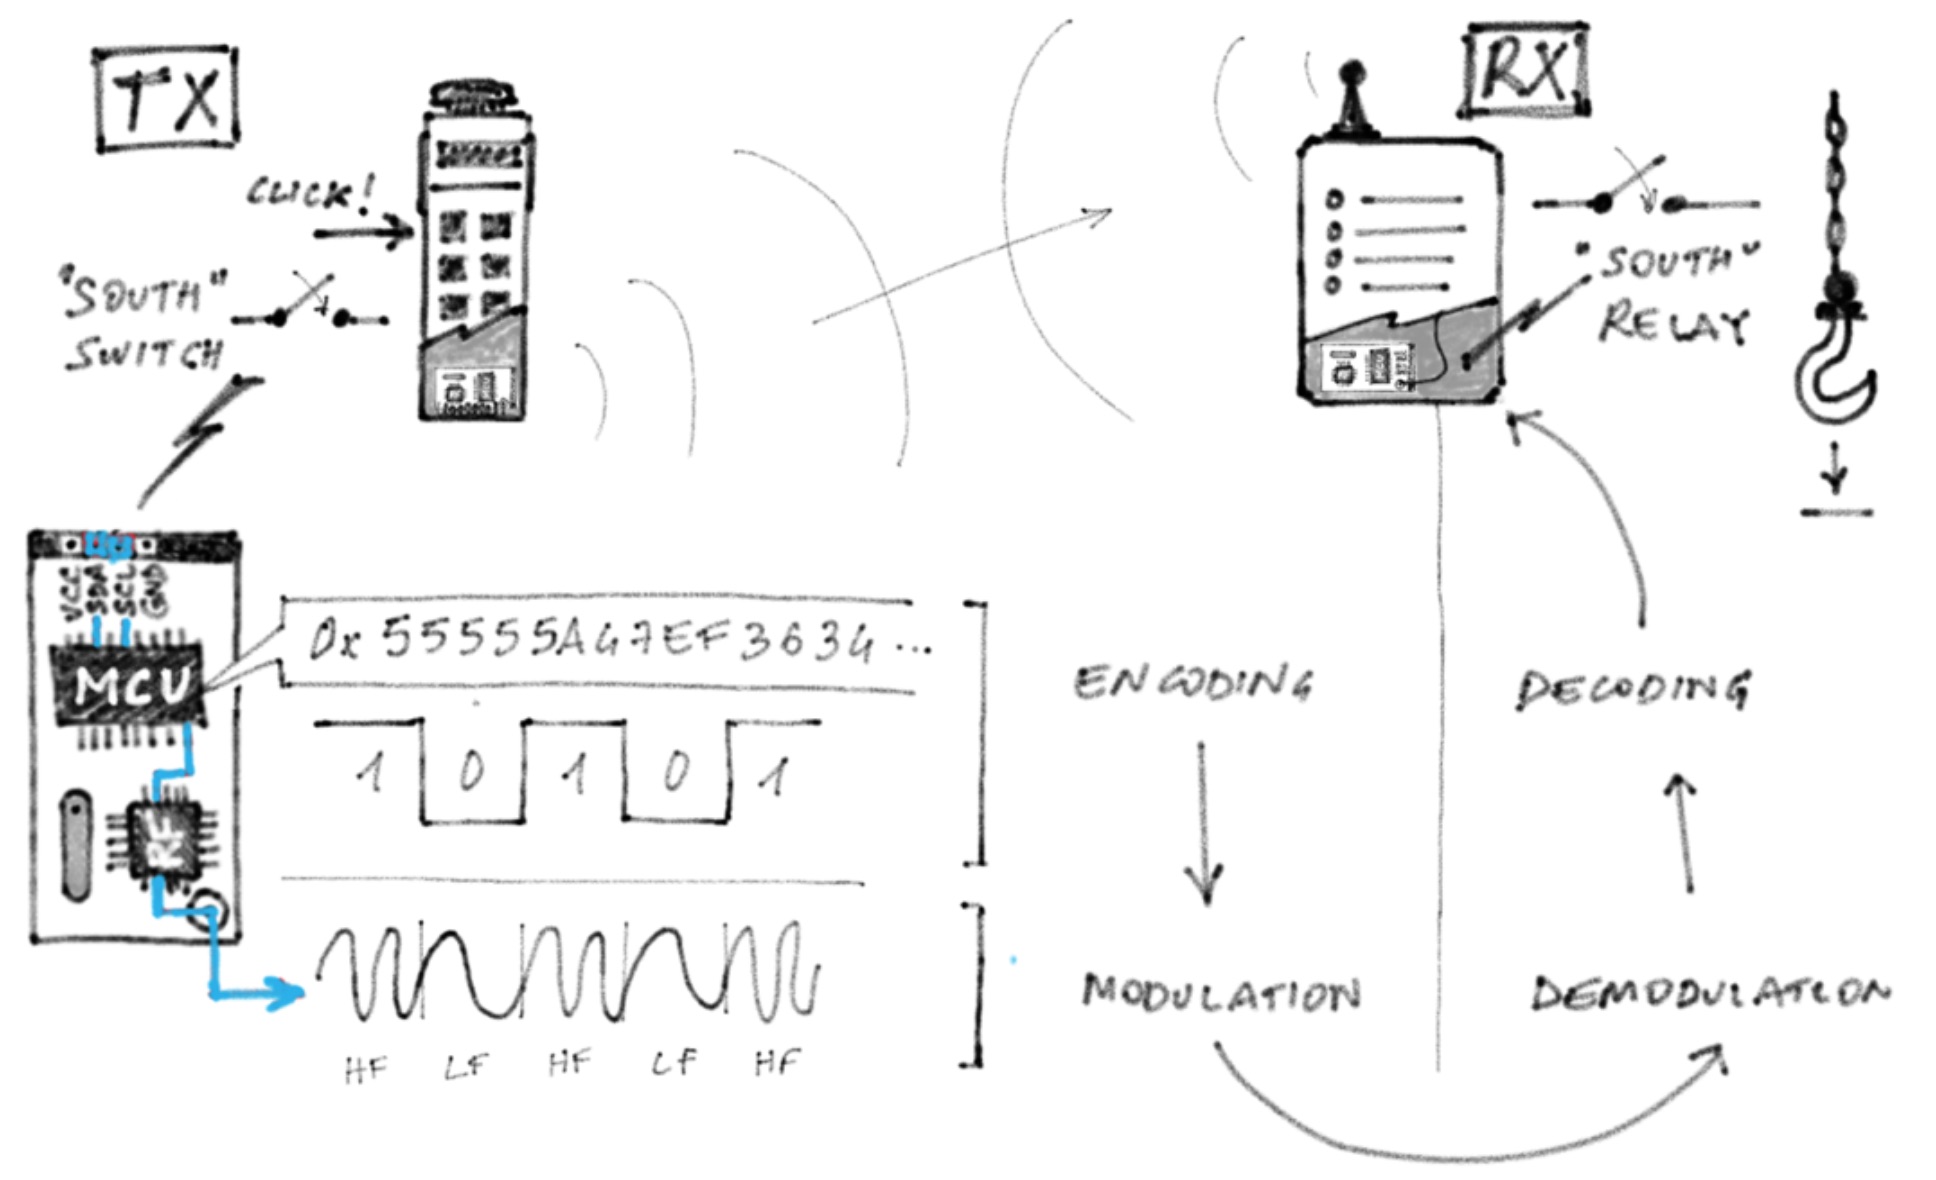 Industrial Radio Remote Control System in a Nutshell